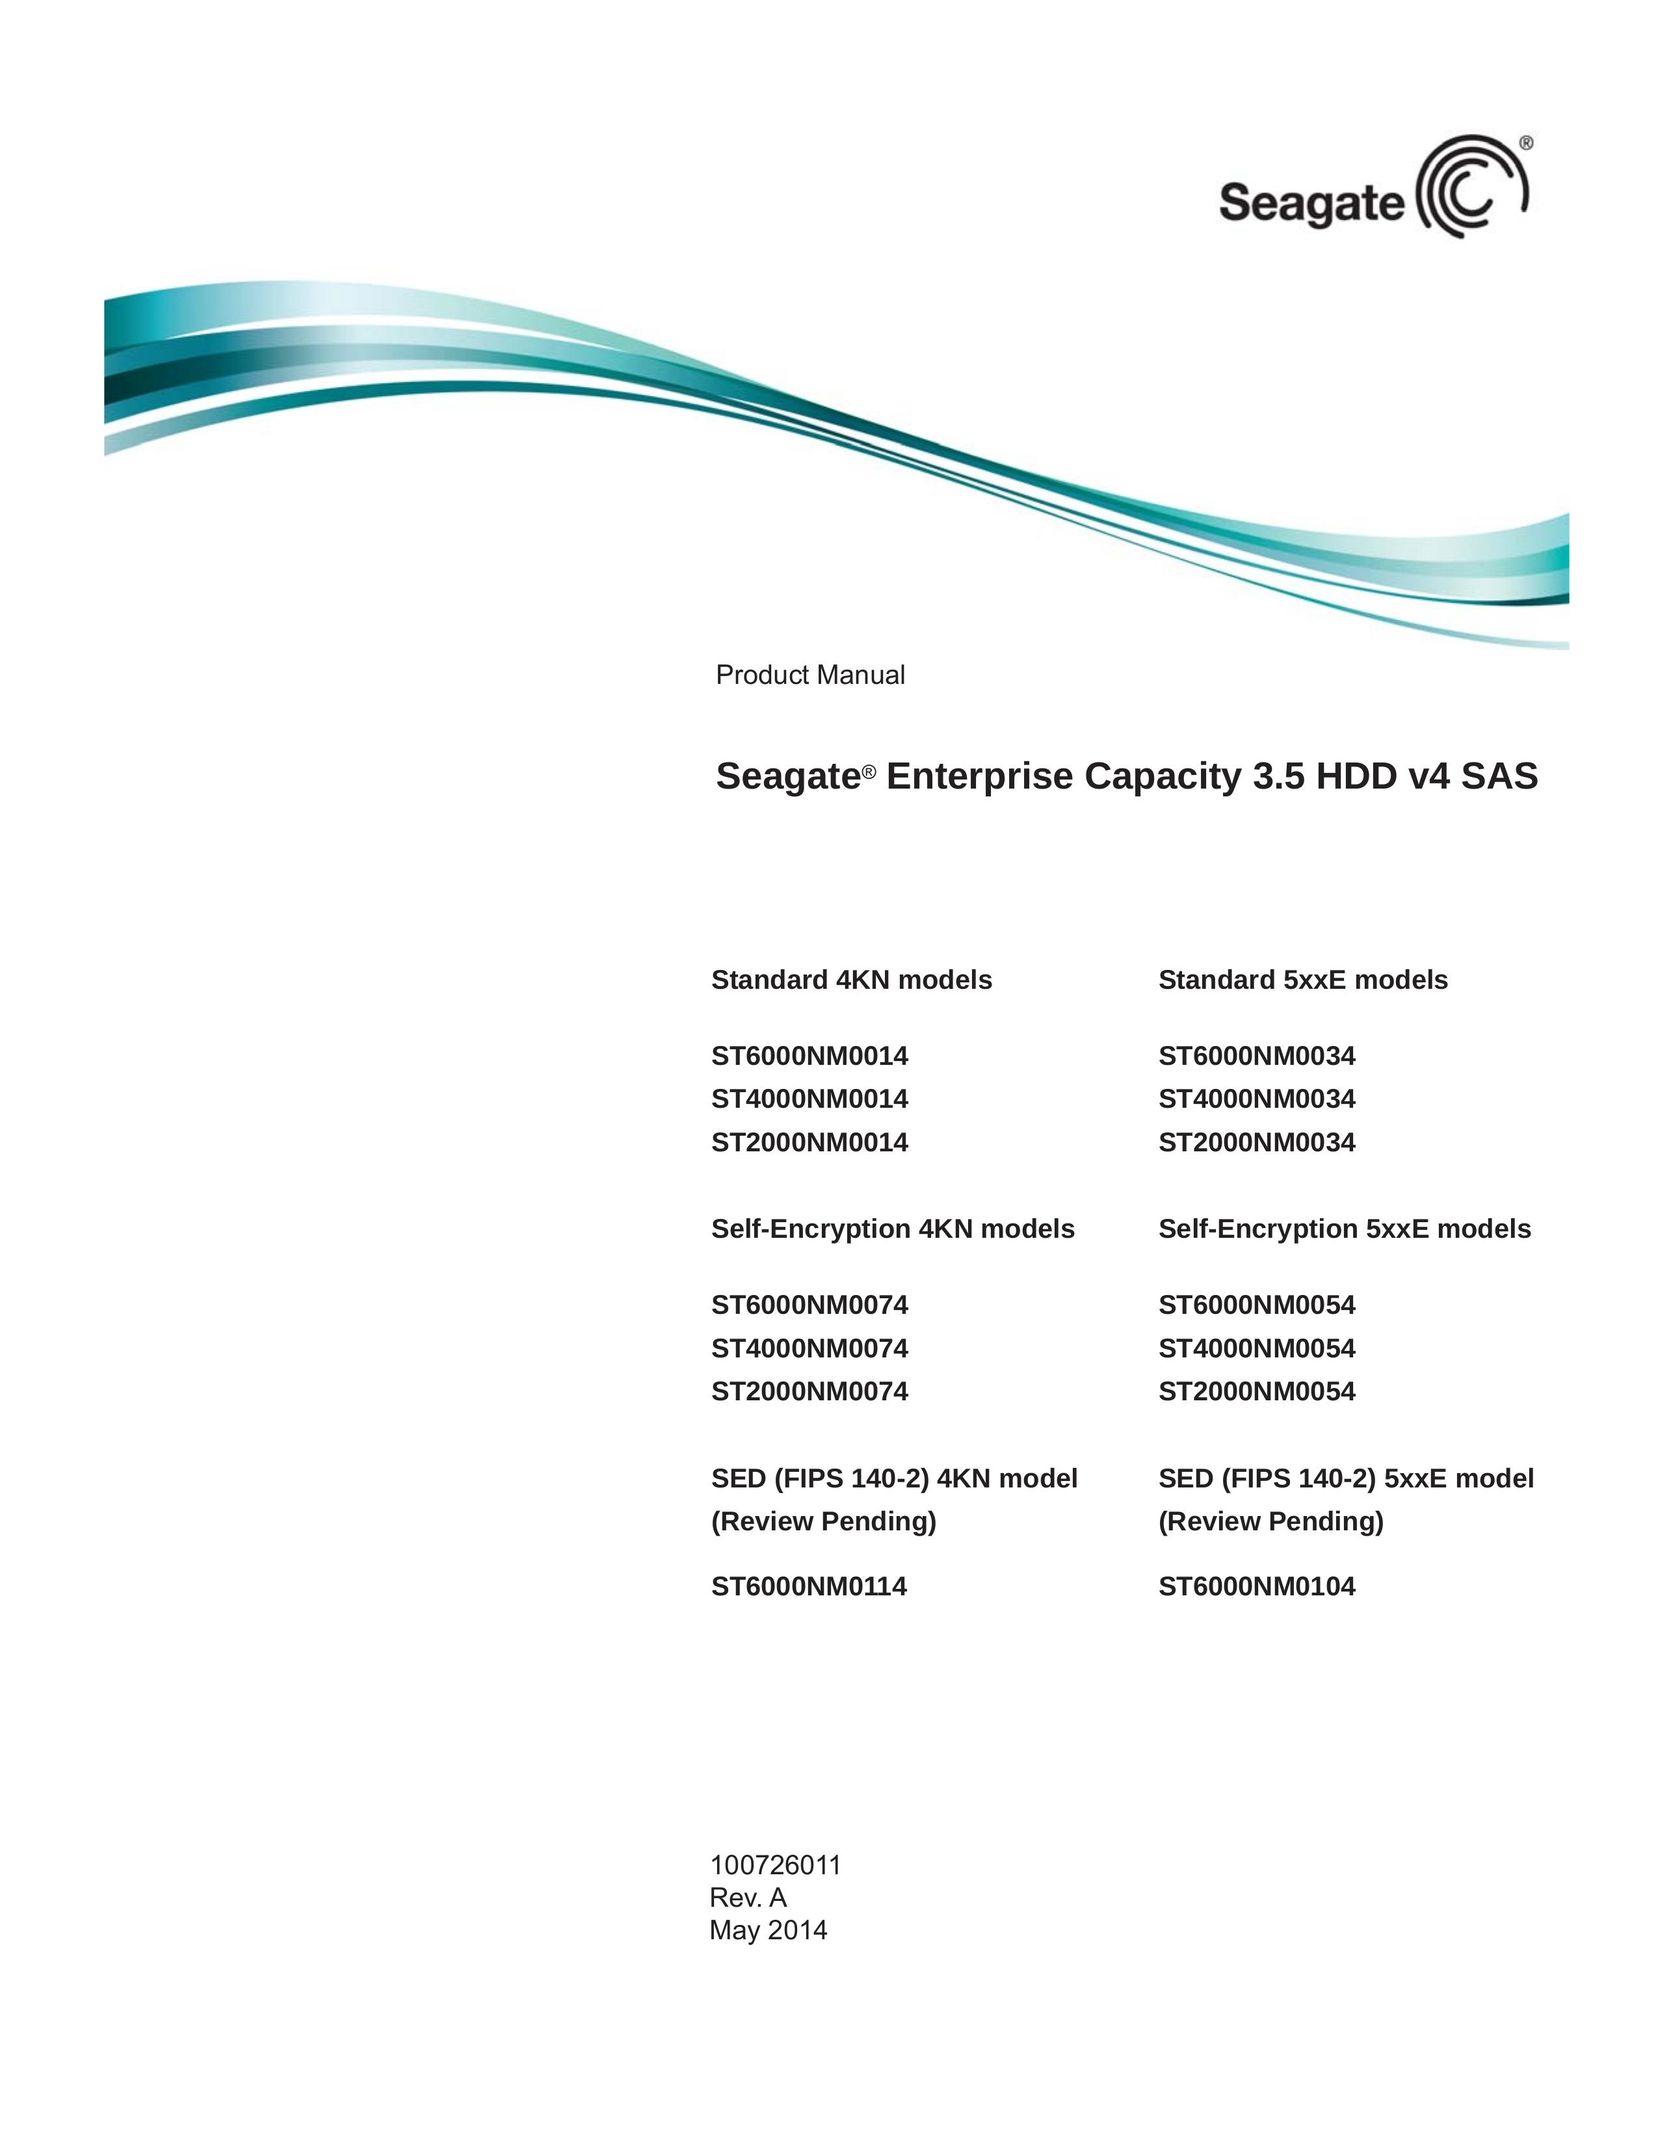 Seagate ST6000NM0034 Laptop User Manual